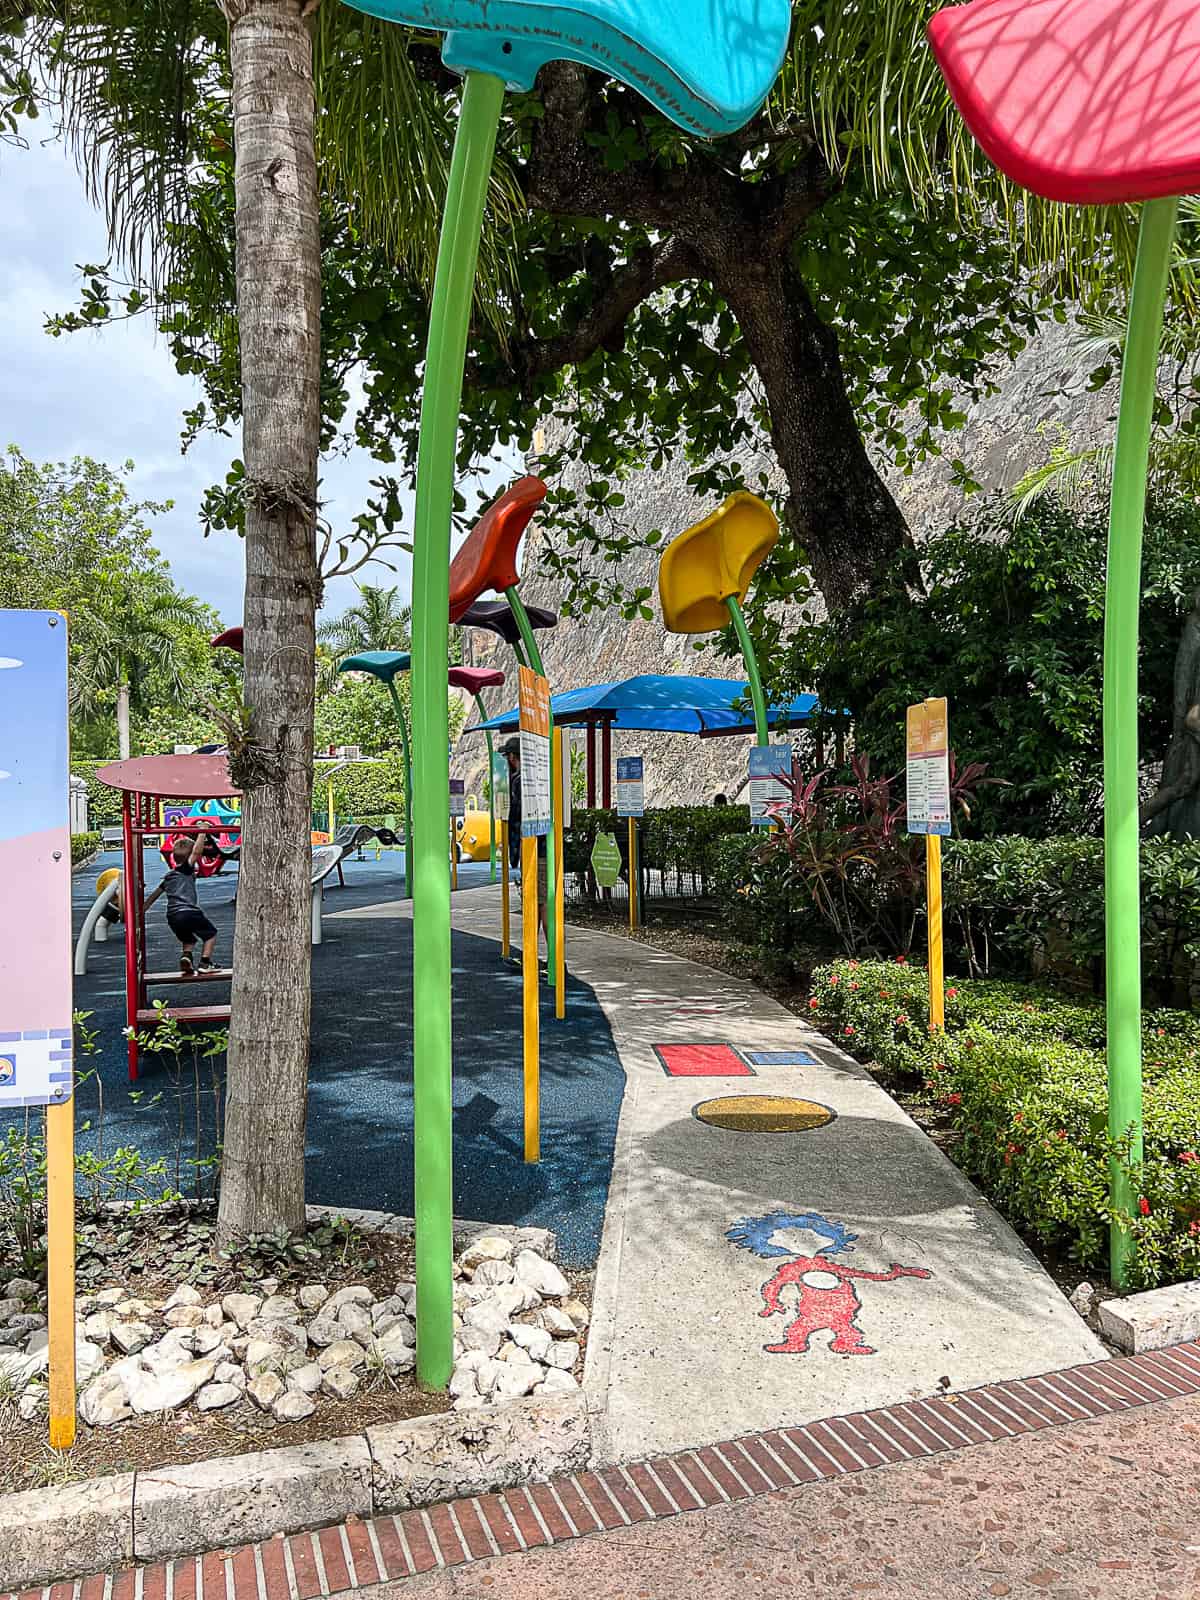 Parque Infantil del Niño Park in San Juan for kids